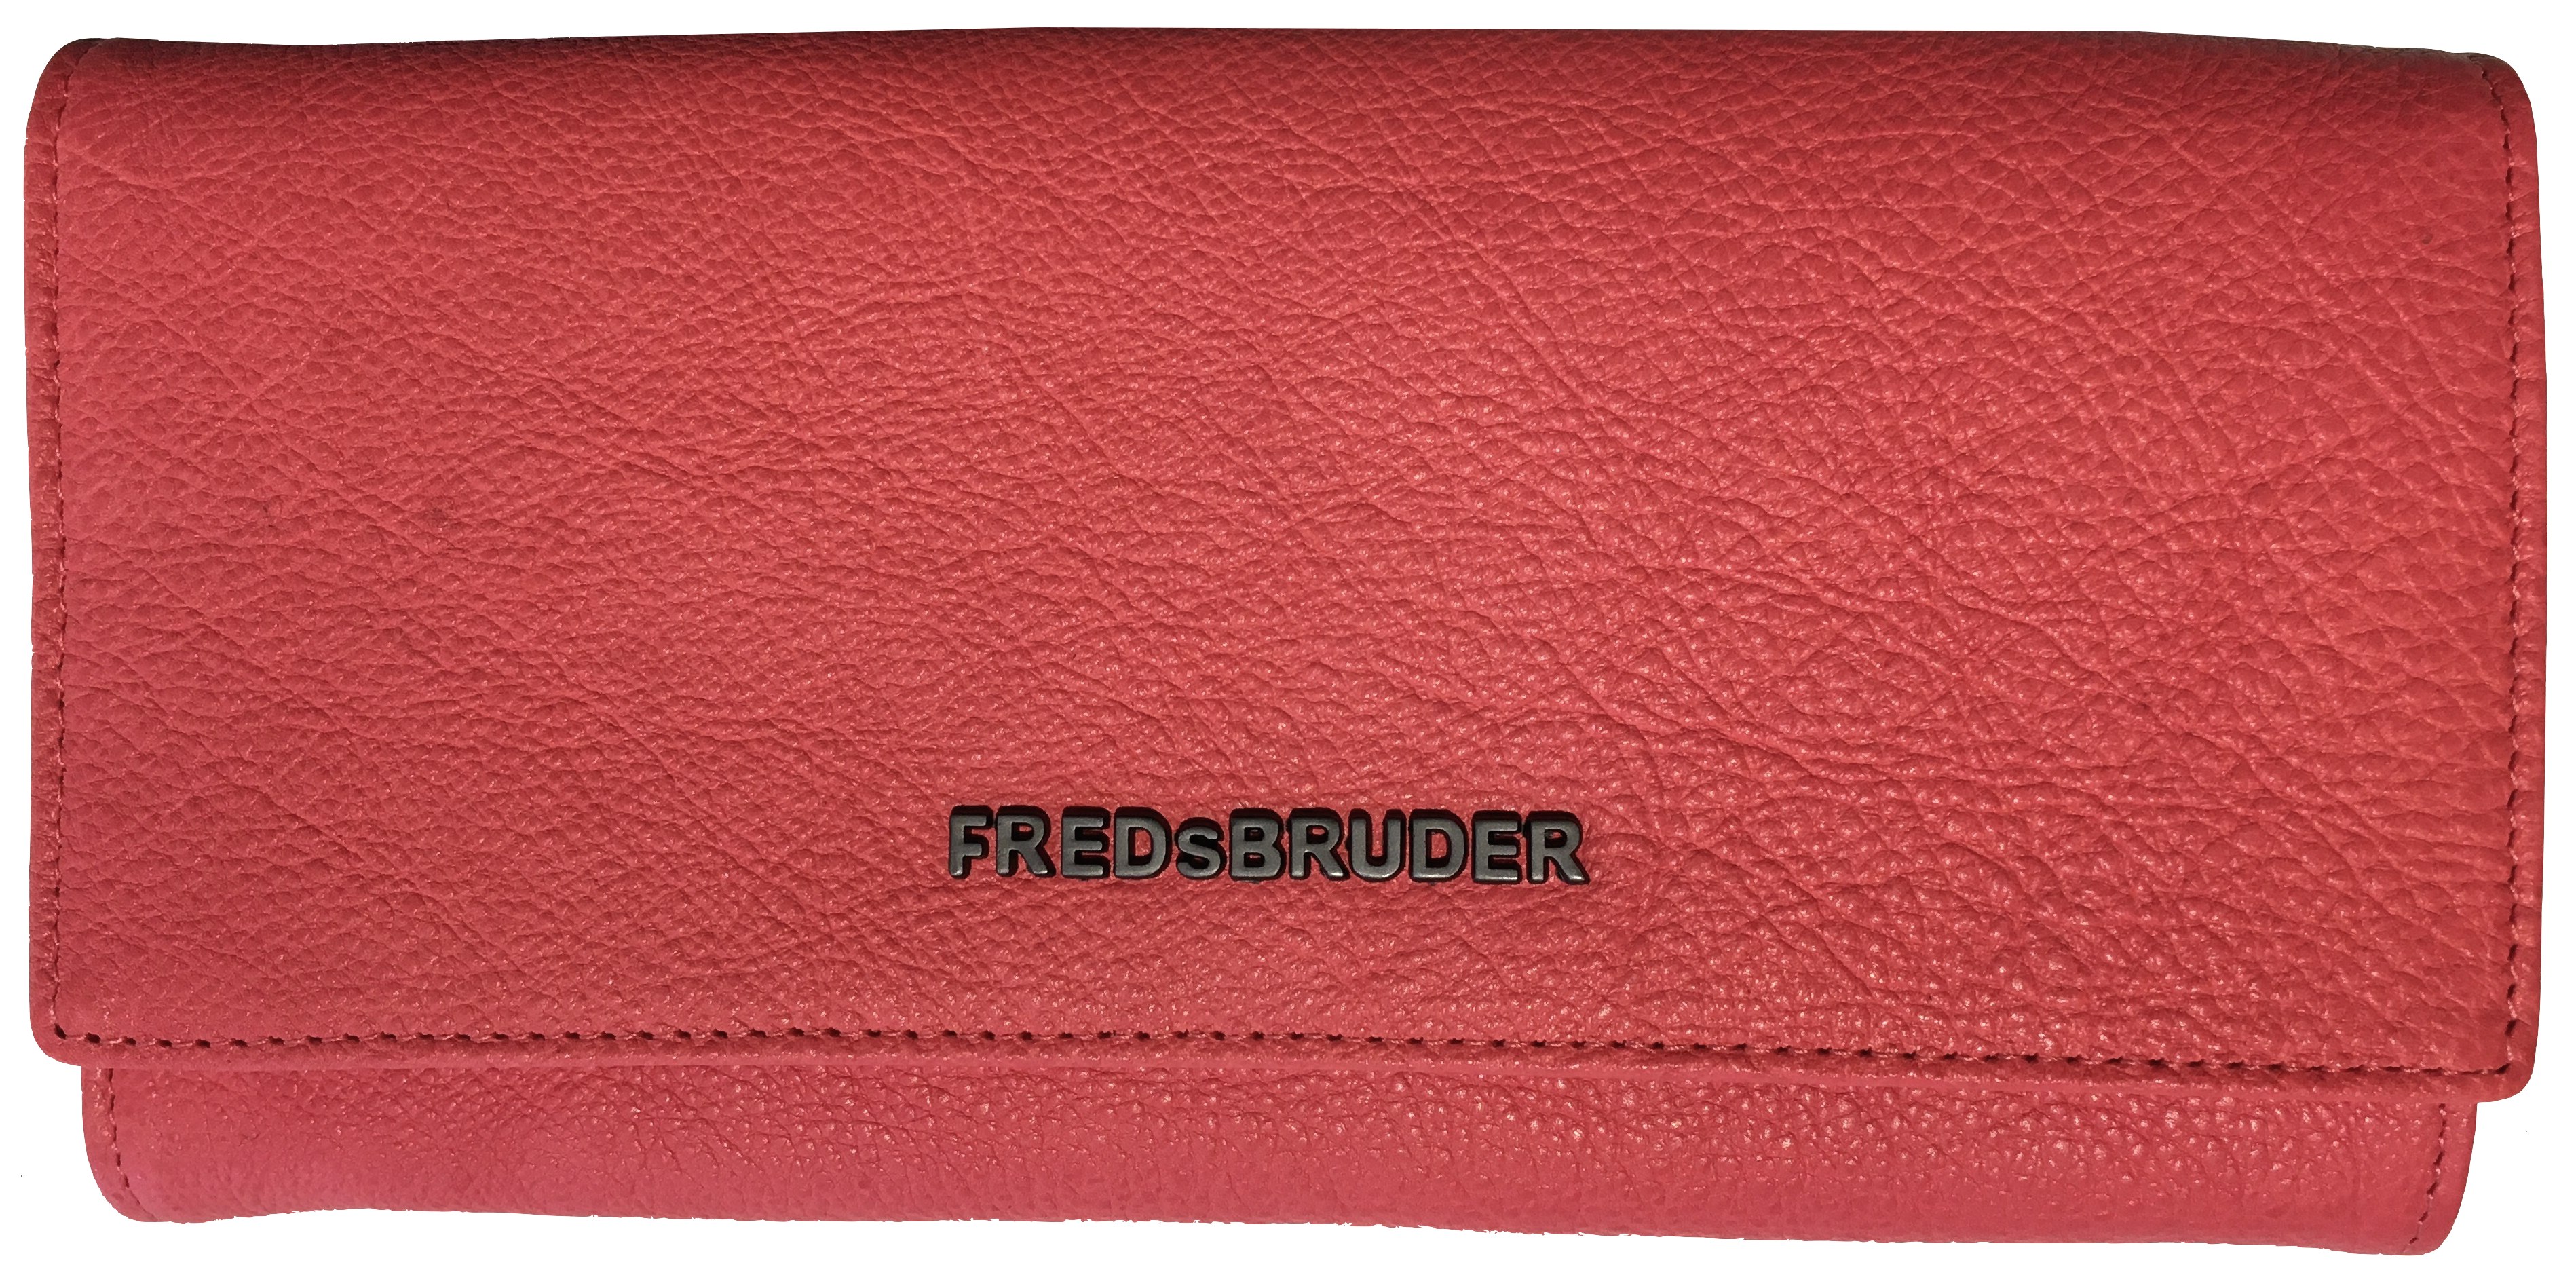 Fredsbruder 'Wallet Easy Iconic' Damenbörse echt Leder fuchia